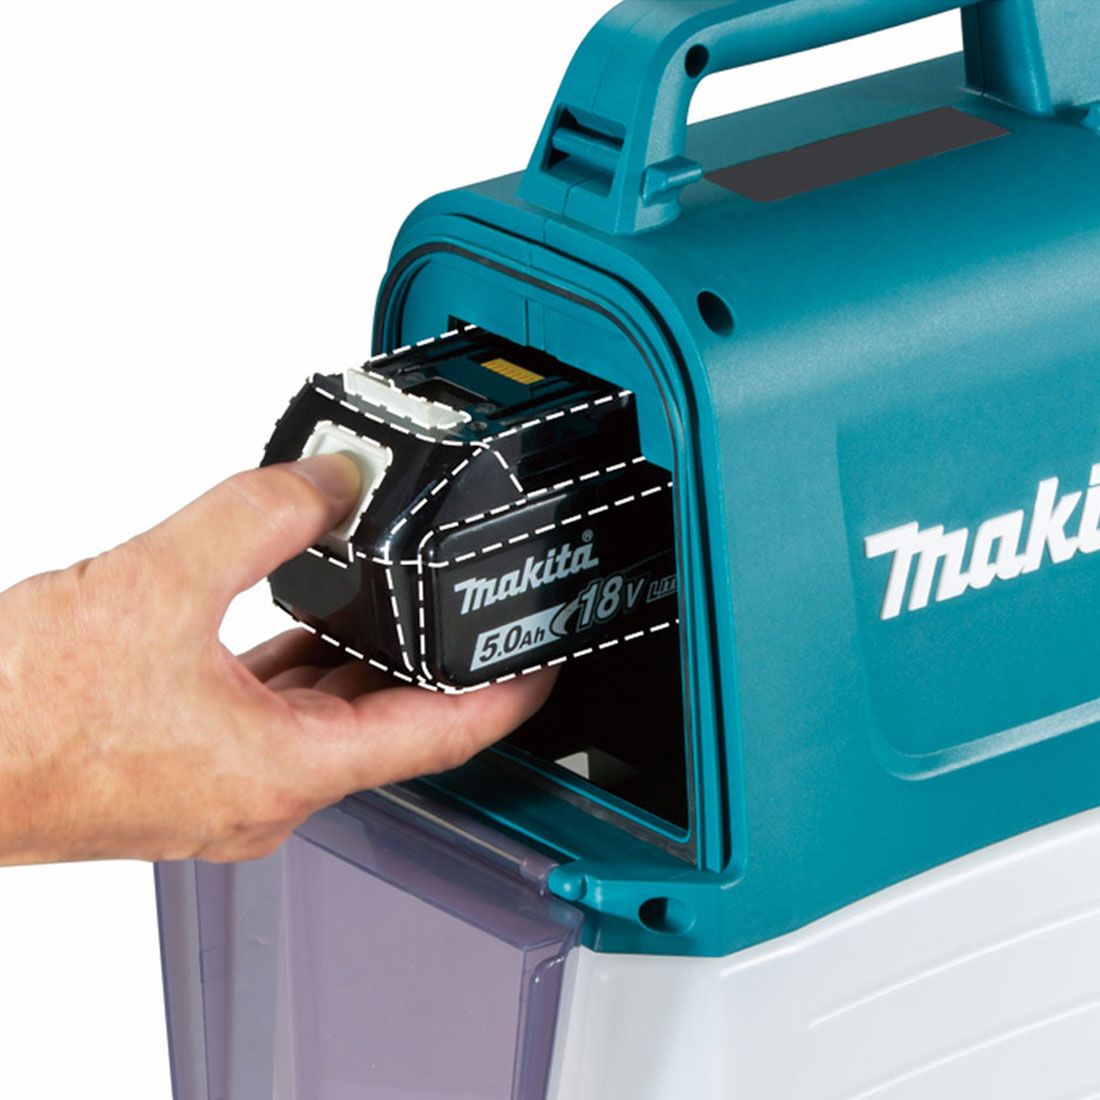 Makita DUS054Z Cordless Garden Sprayer 5L 18V LXT® Li-Ion (Bare Tool)